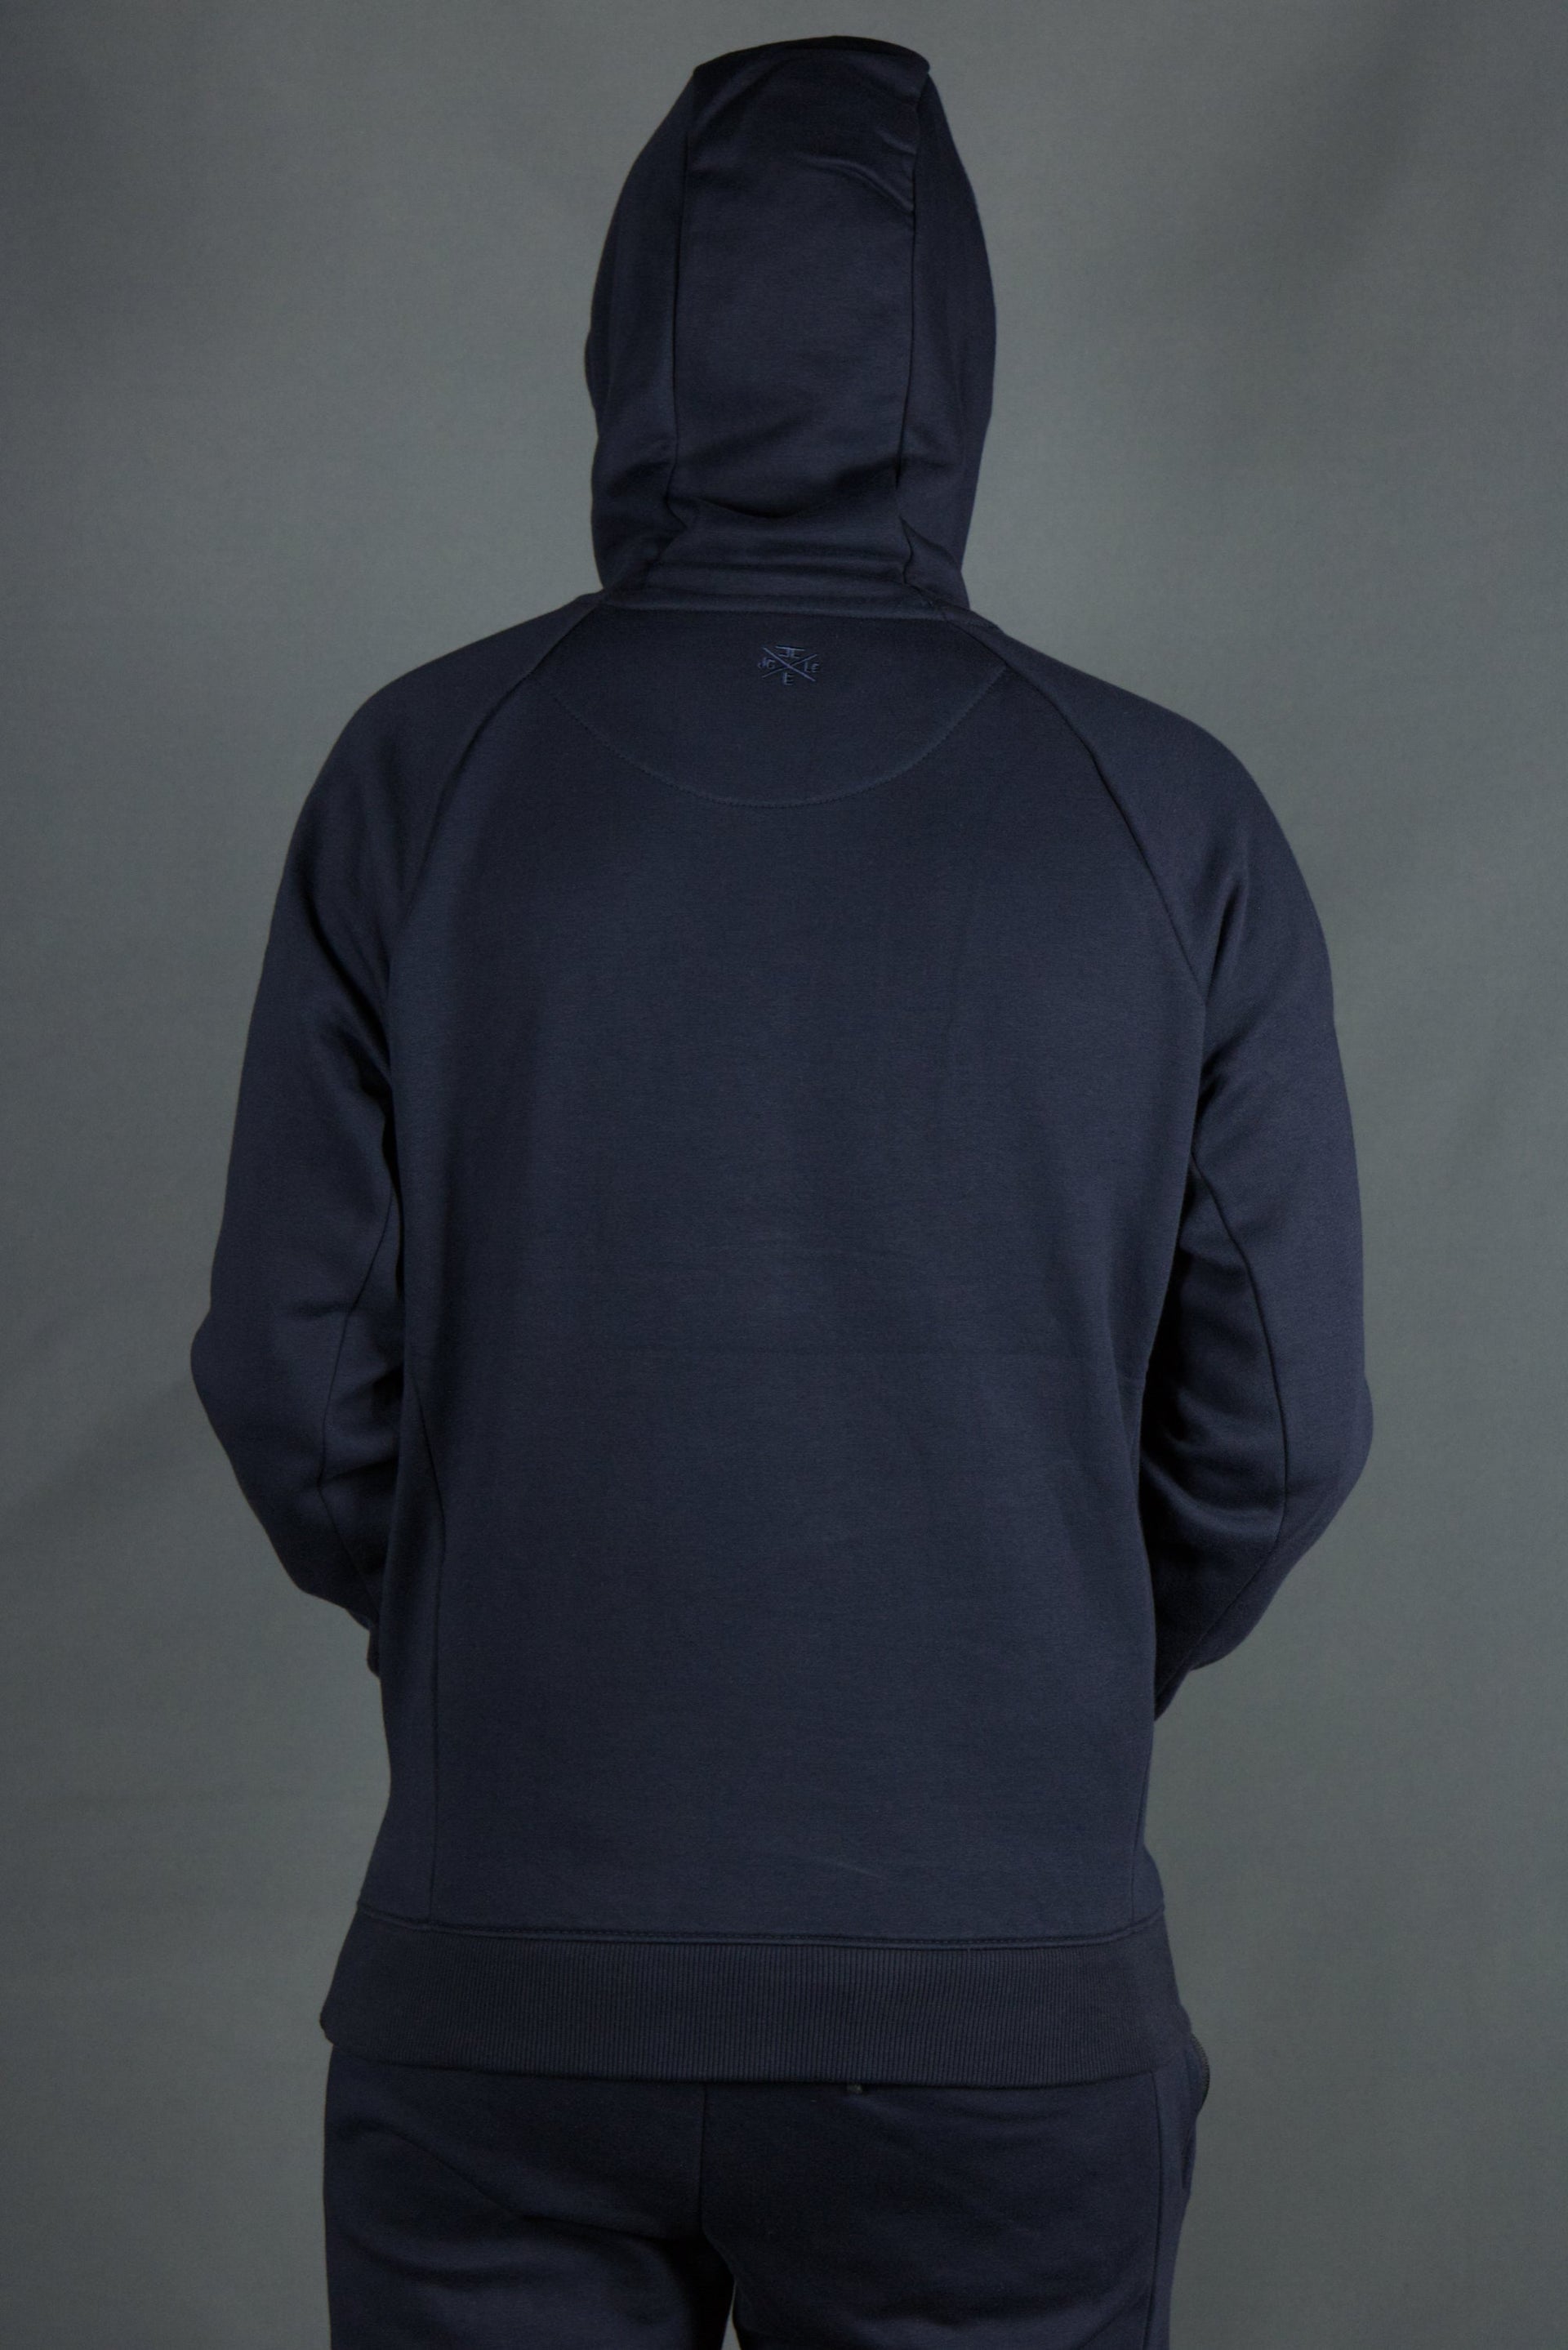 The backside of the navy blue Jordan Craig basic fleece pullover hoodie.